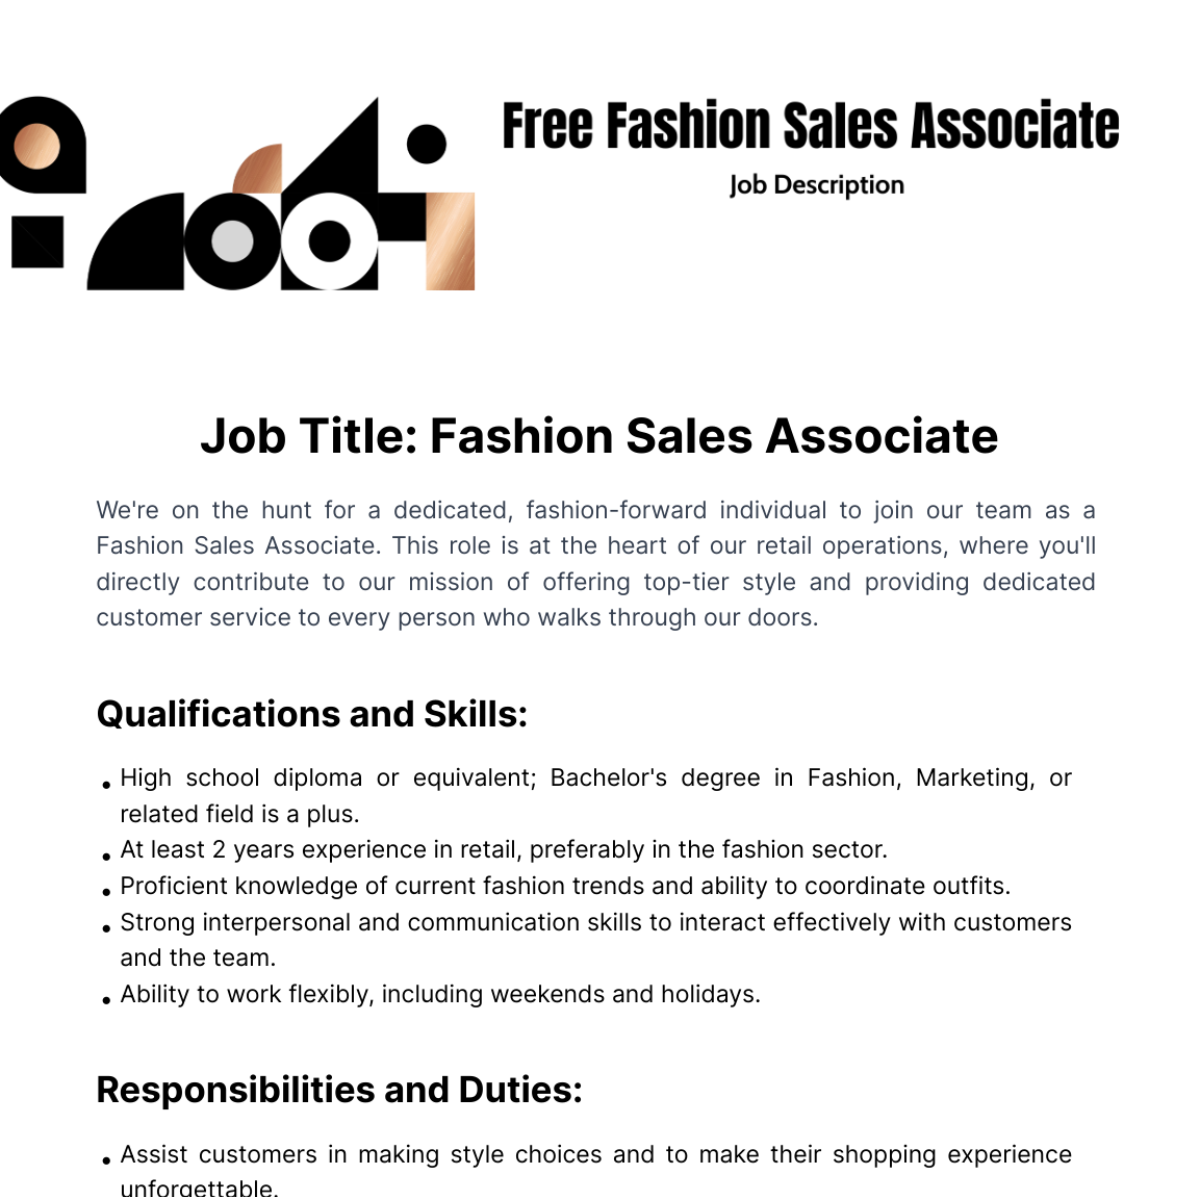 Free Fashion Sales Associate Job Description Template